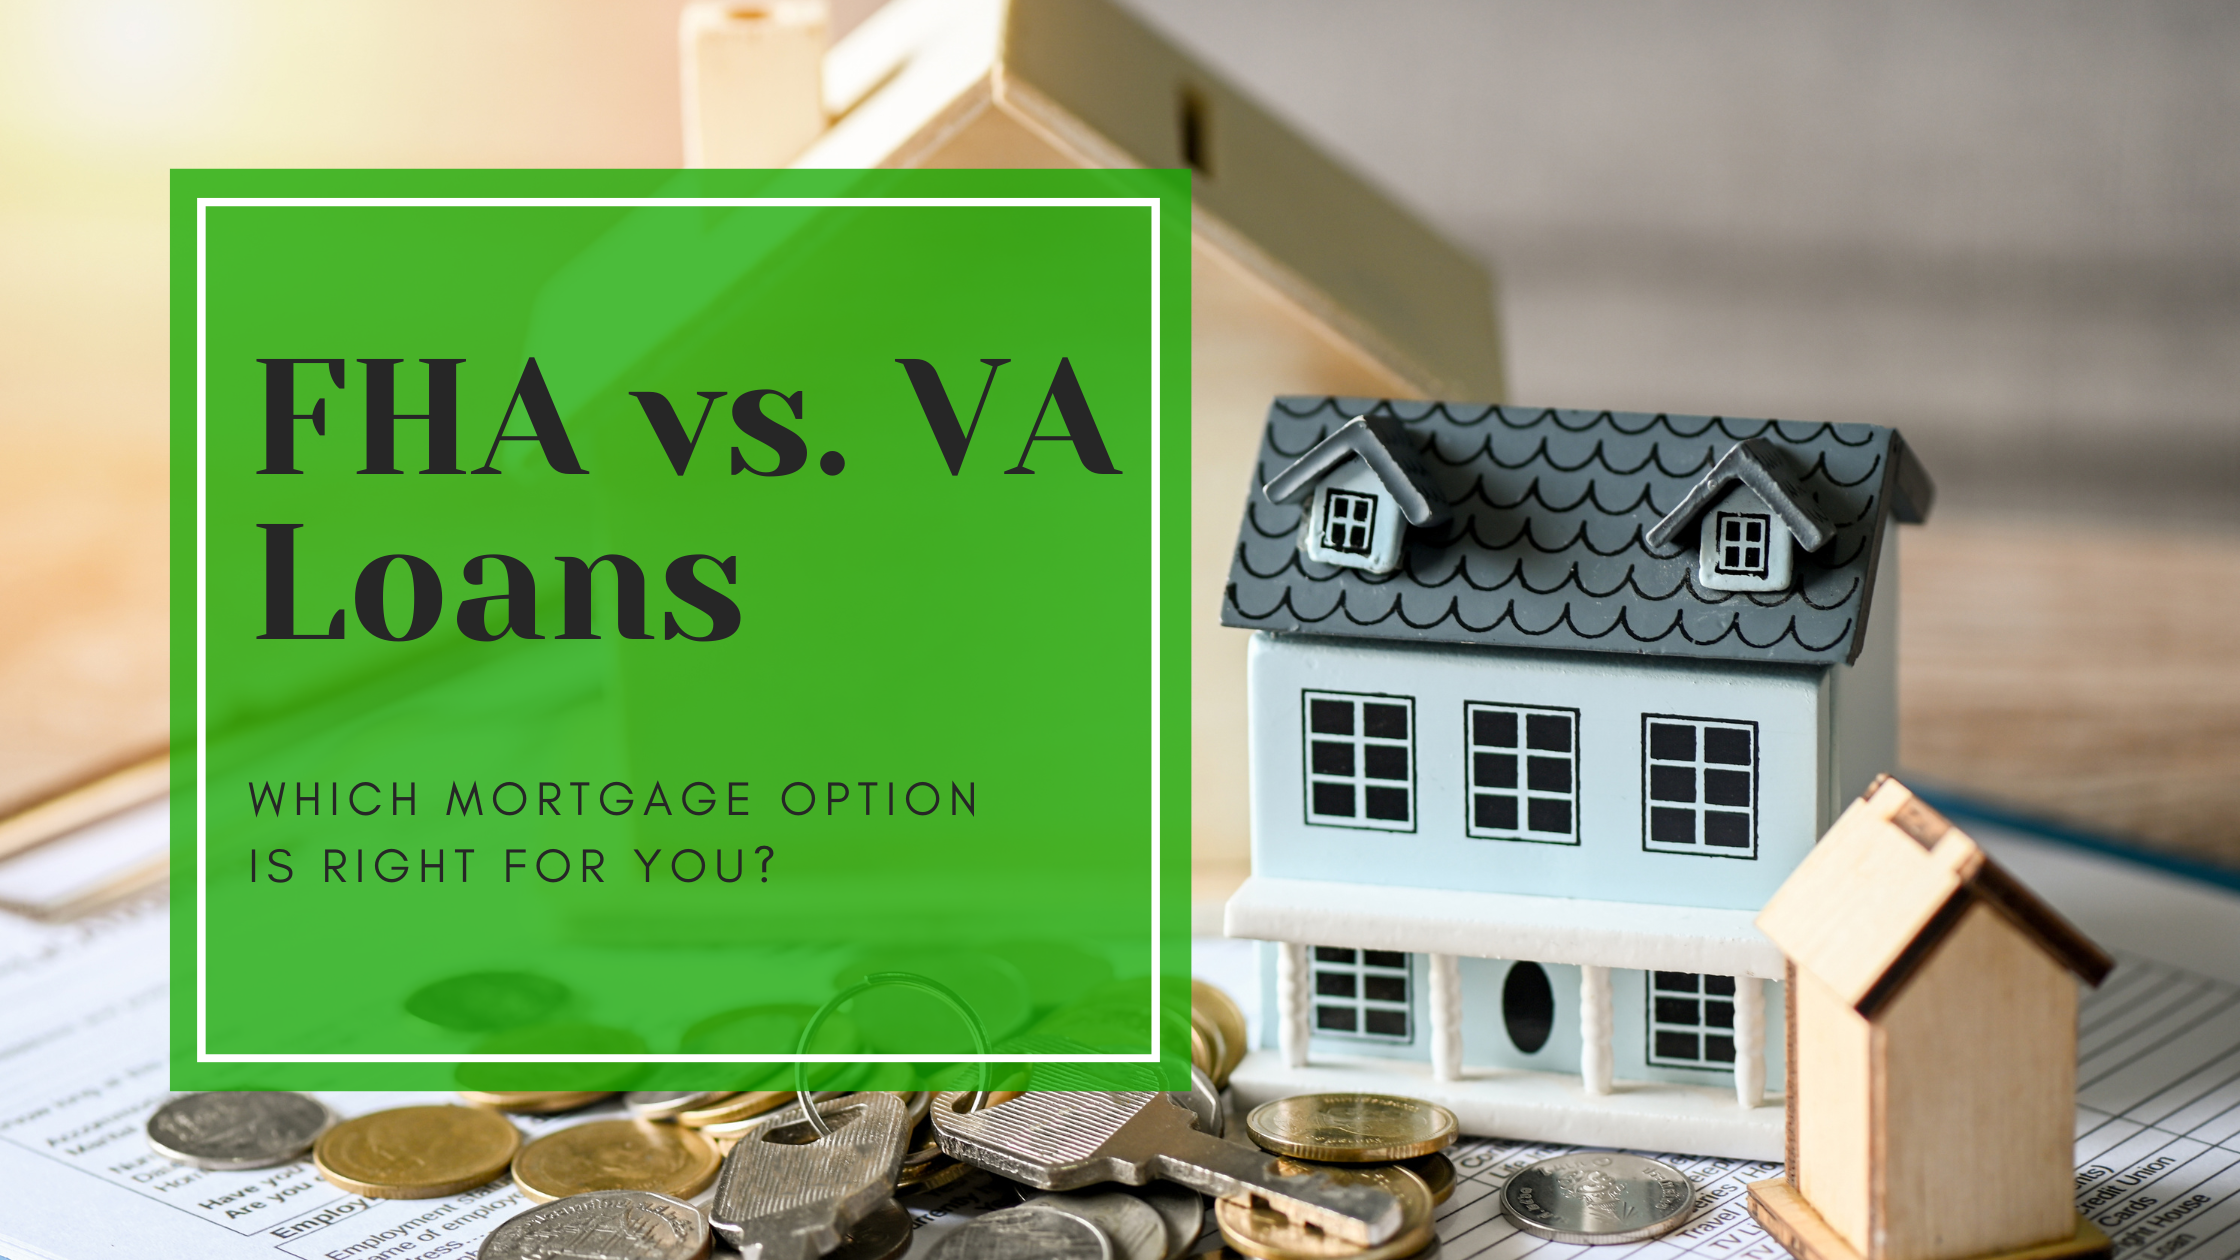 FHA vs. VA Loans